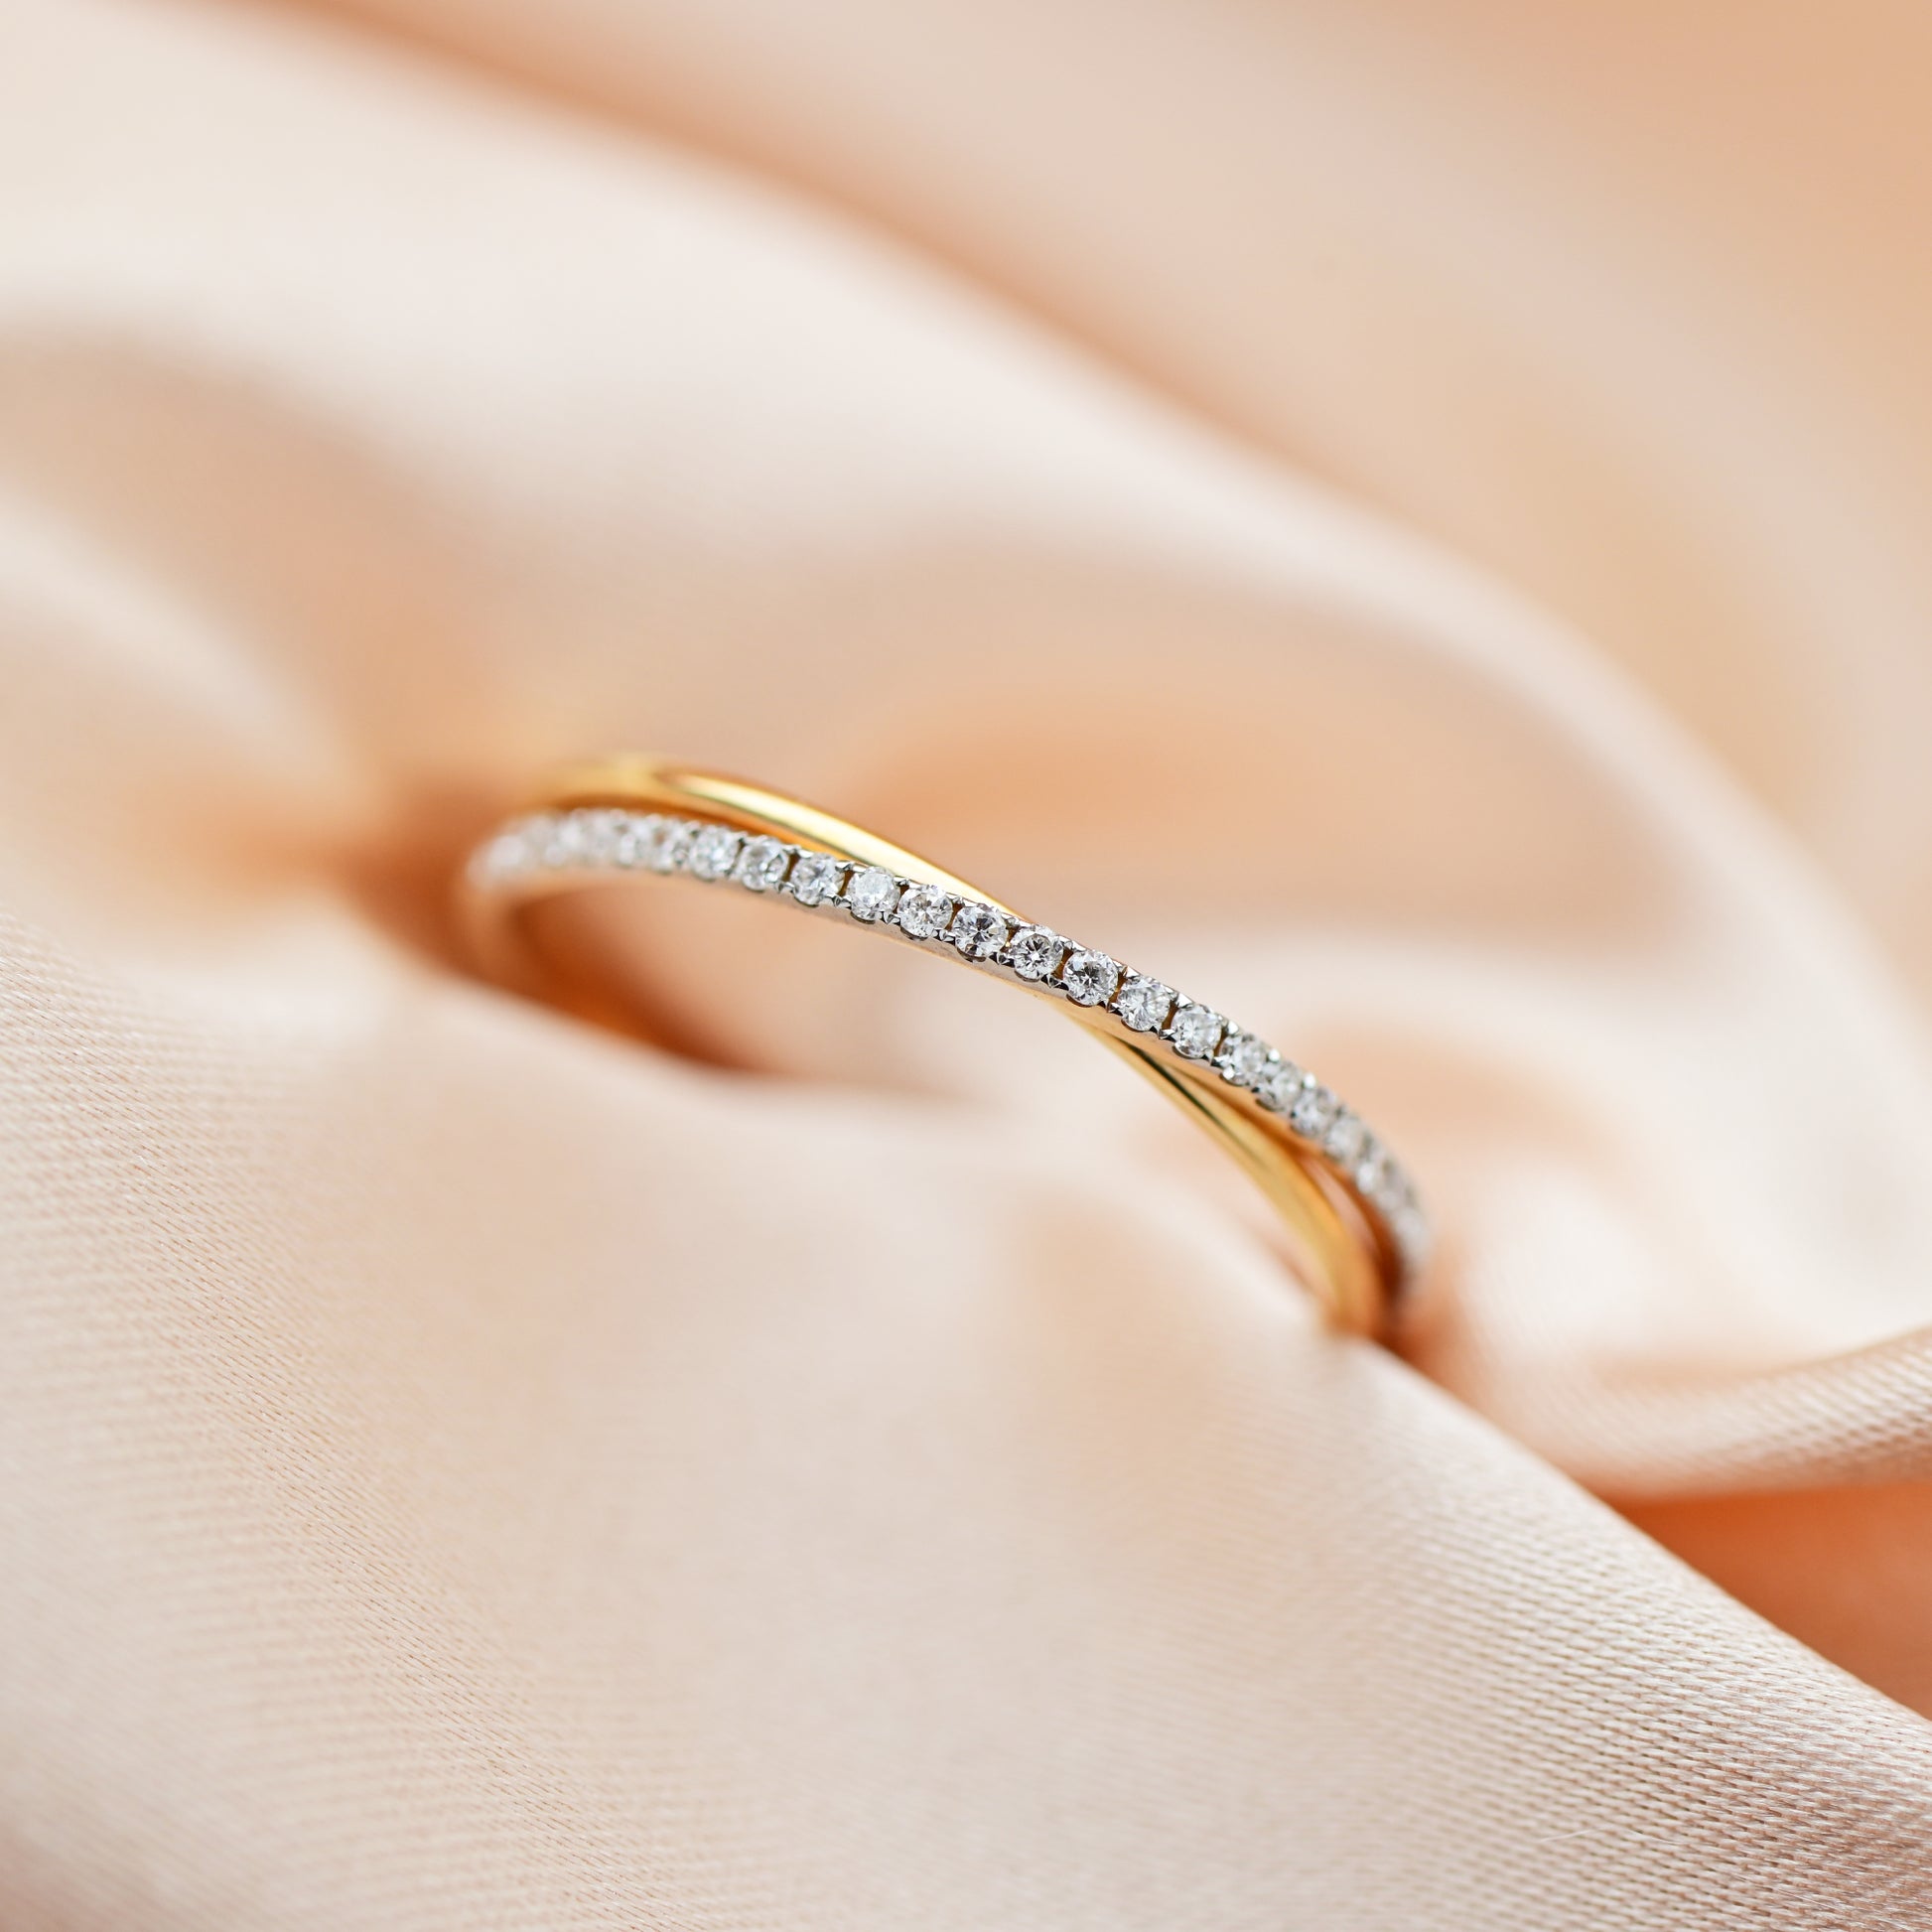 香檳色背景18k玫瑰金交錯鑽石戒指 18k Rose Gold 2-Row Diamond Ring in champagne gold background